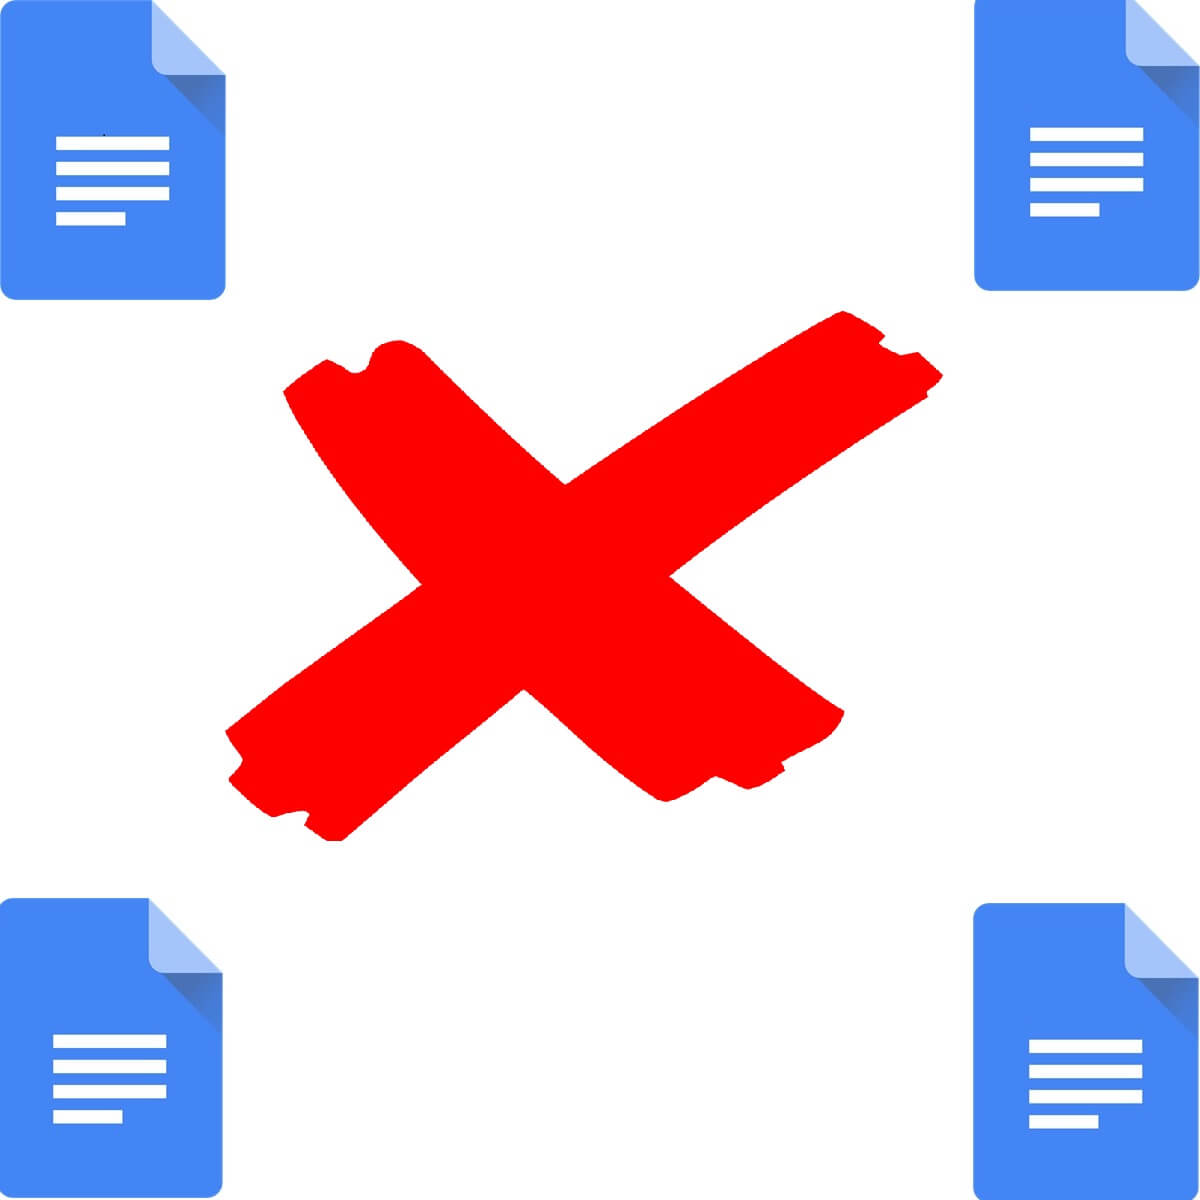 Google docs won't open in chrome